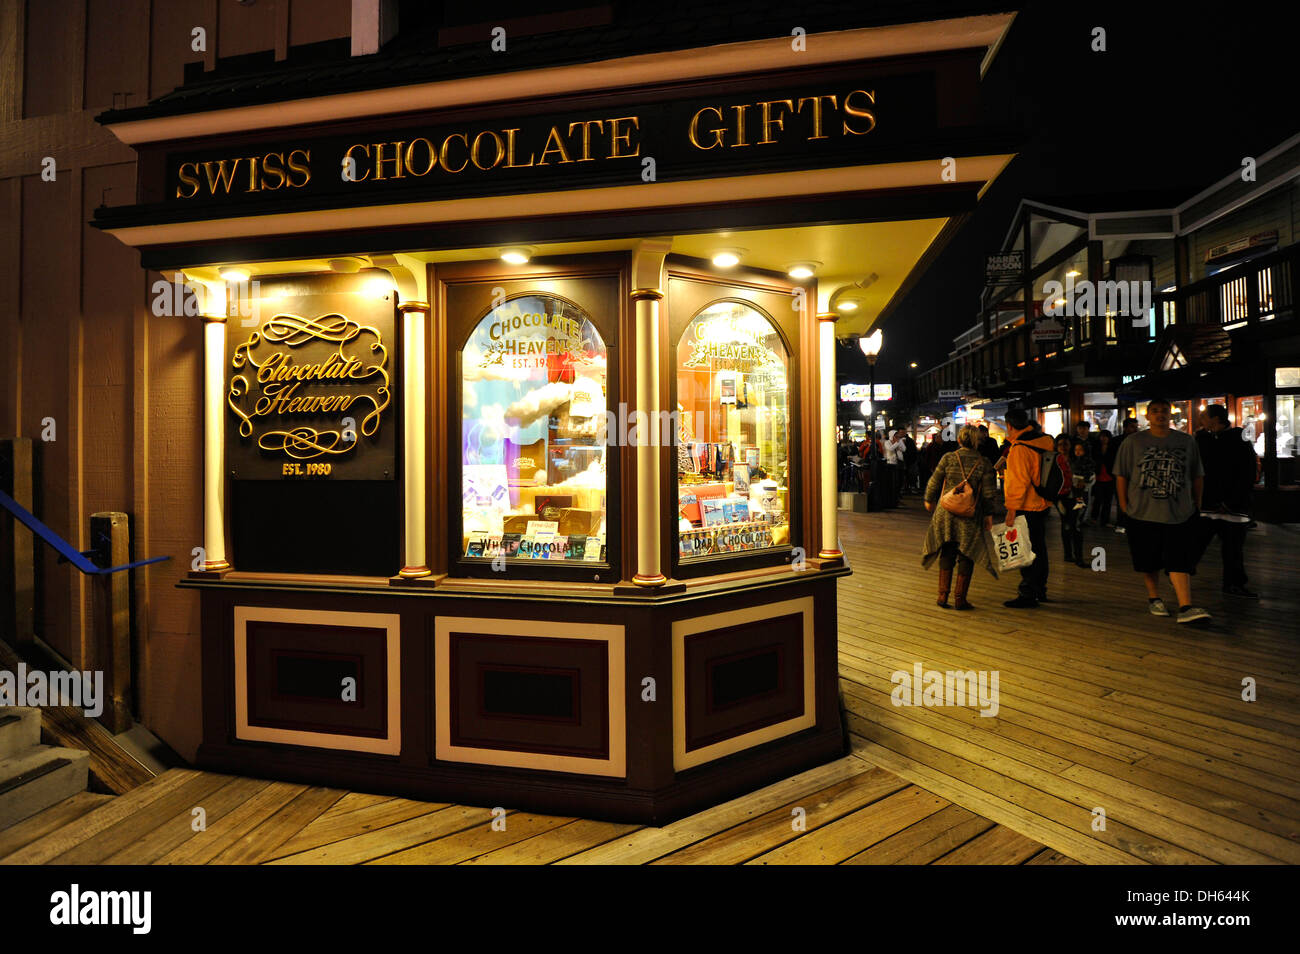 Chocolate shop Chocolate Heaven, Pier 39, Fisherman's Wharf, San Francisco, California, United States of America, USA Stock Photo